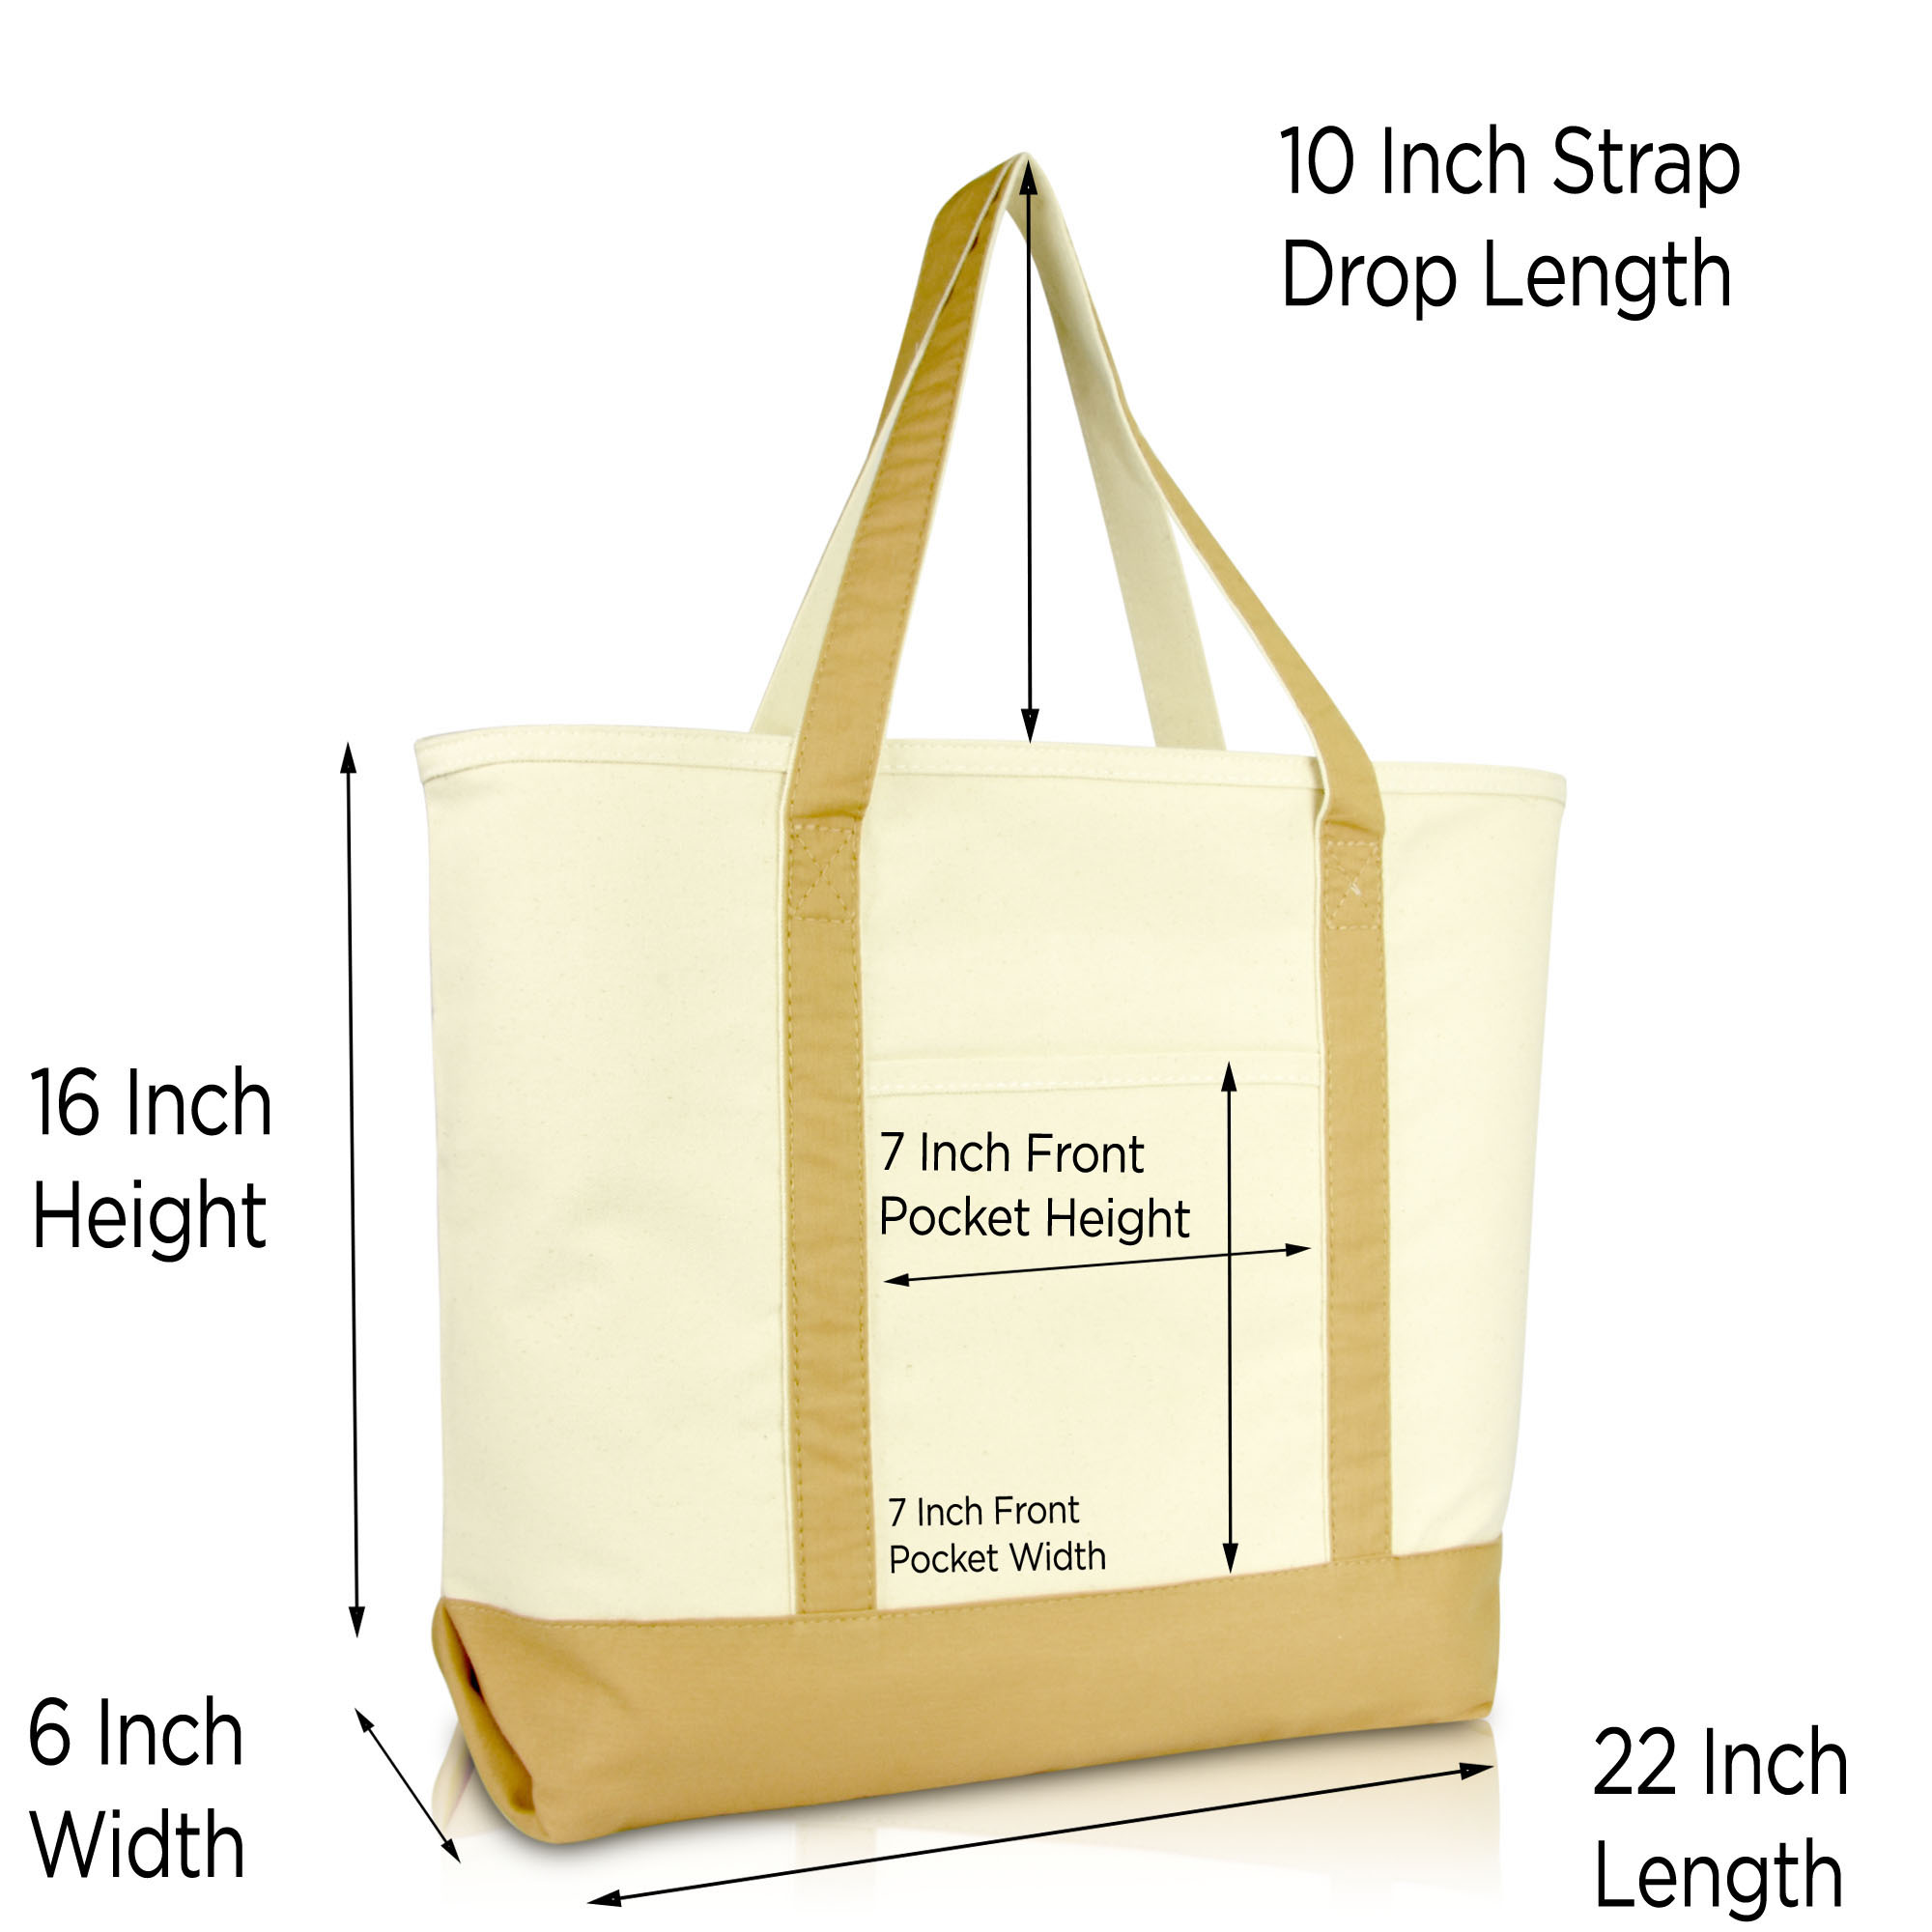 DALIX 22" Cotton Canvas Bag Beach Shopping Zipper in Brown - image 2 of 6